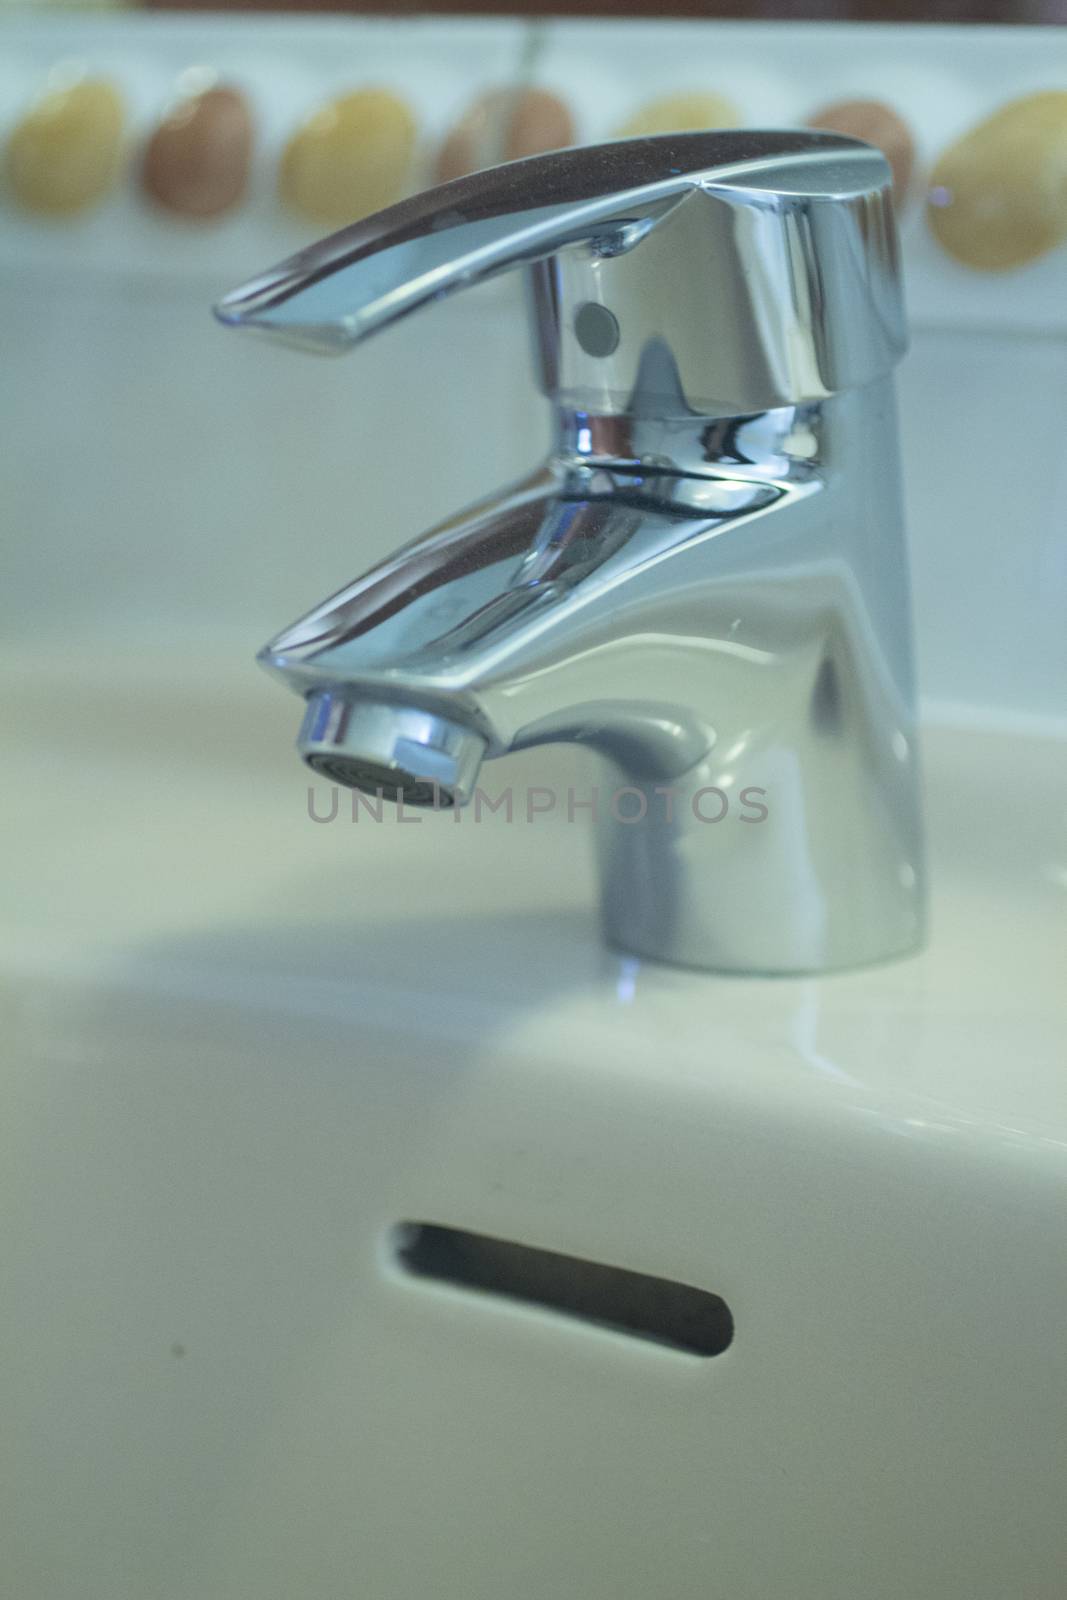 Domestic bathroom wash basin tap close-up by edwardolive